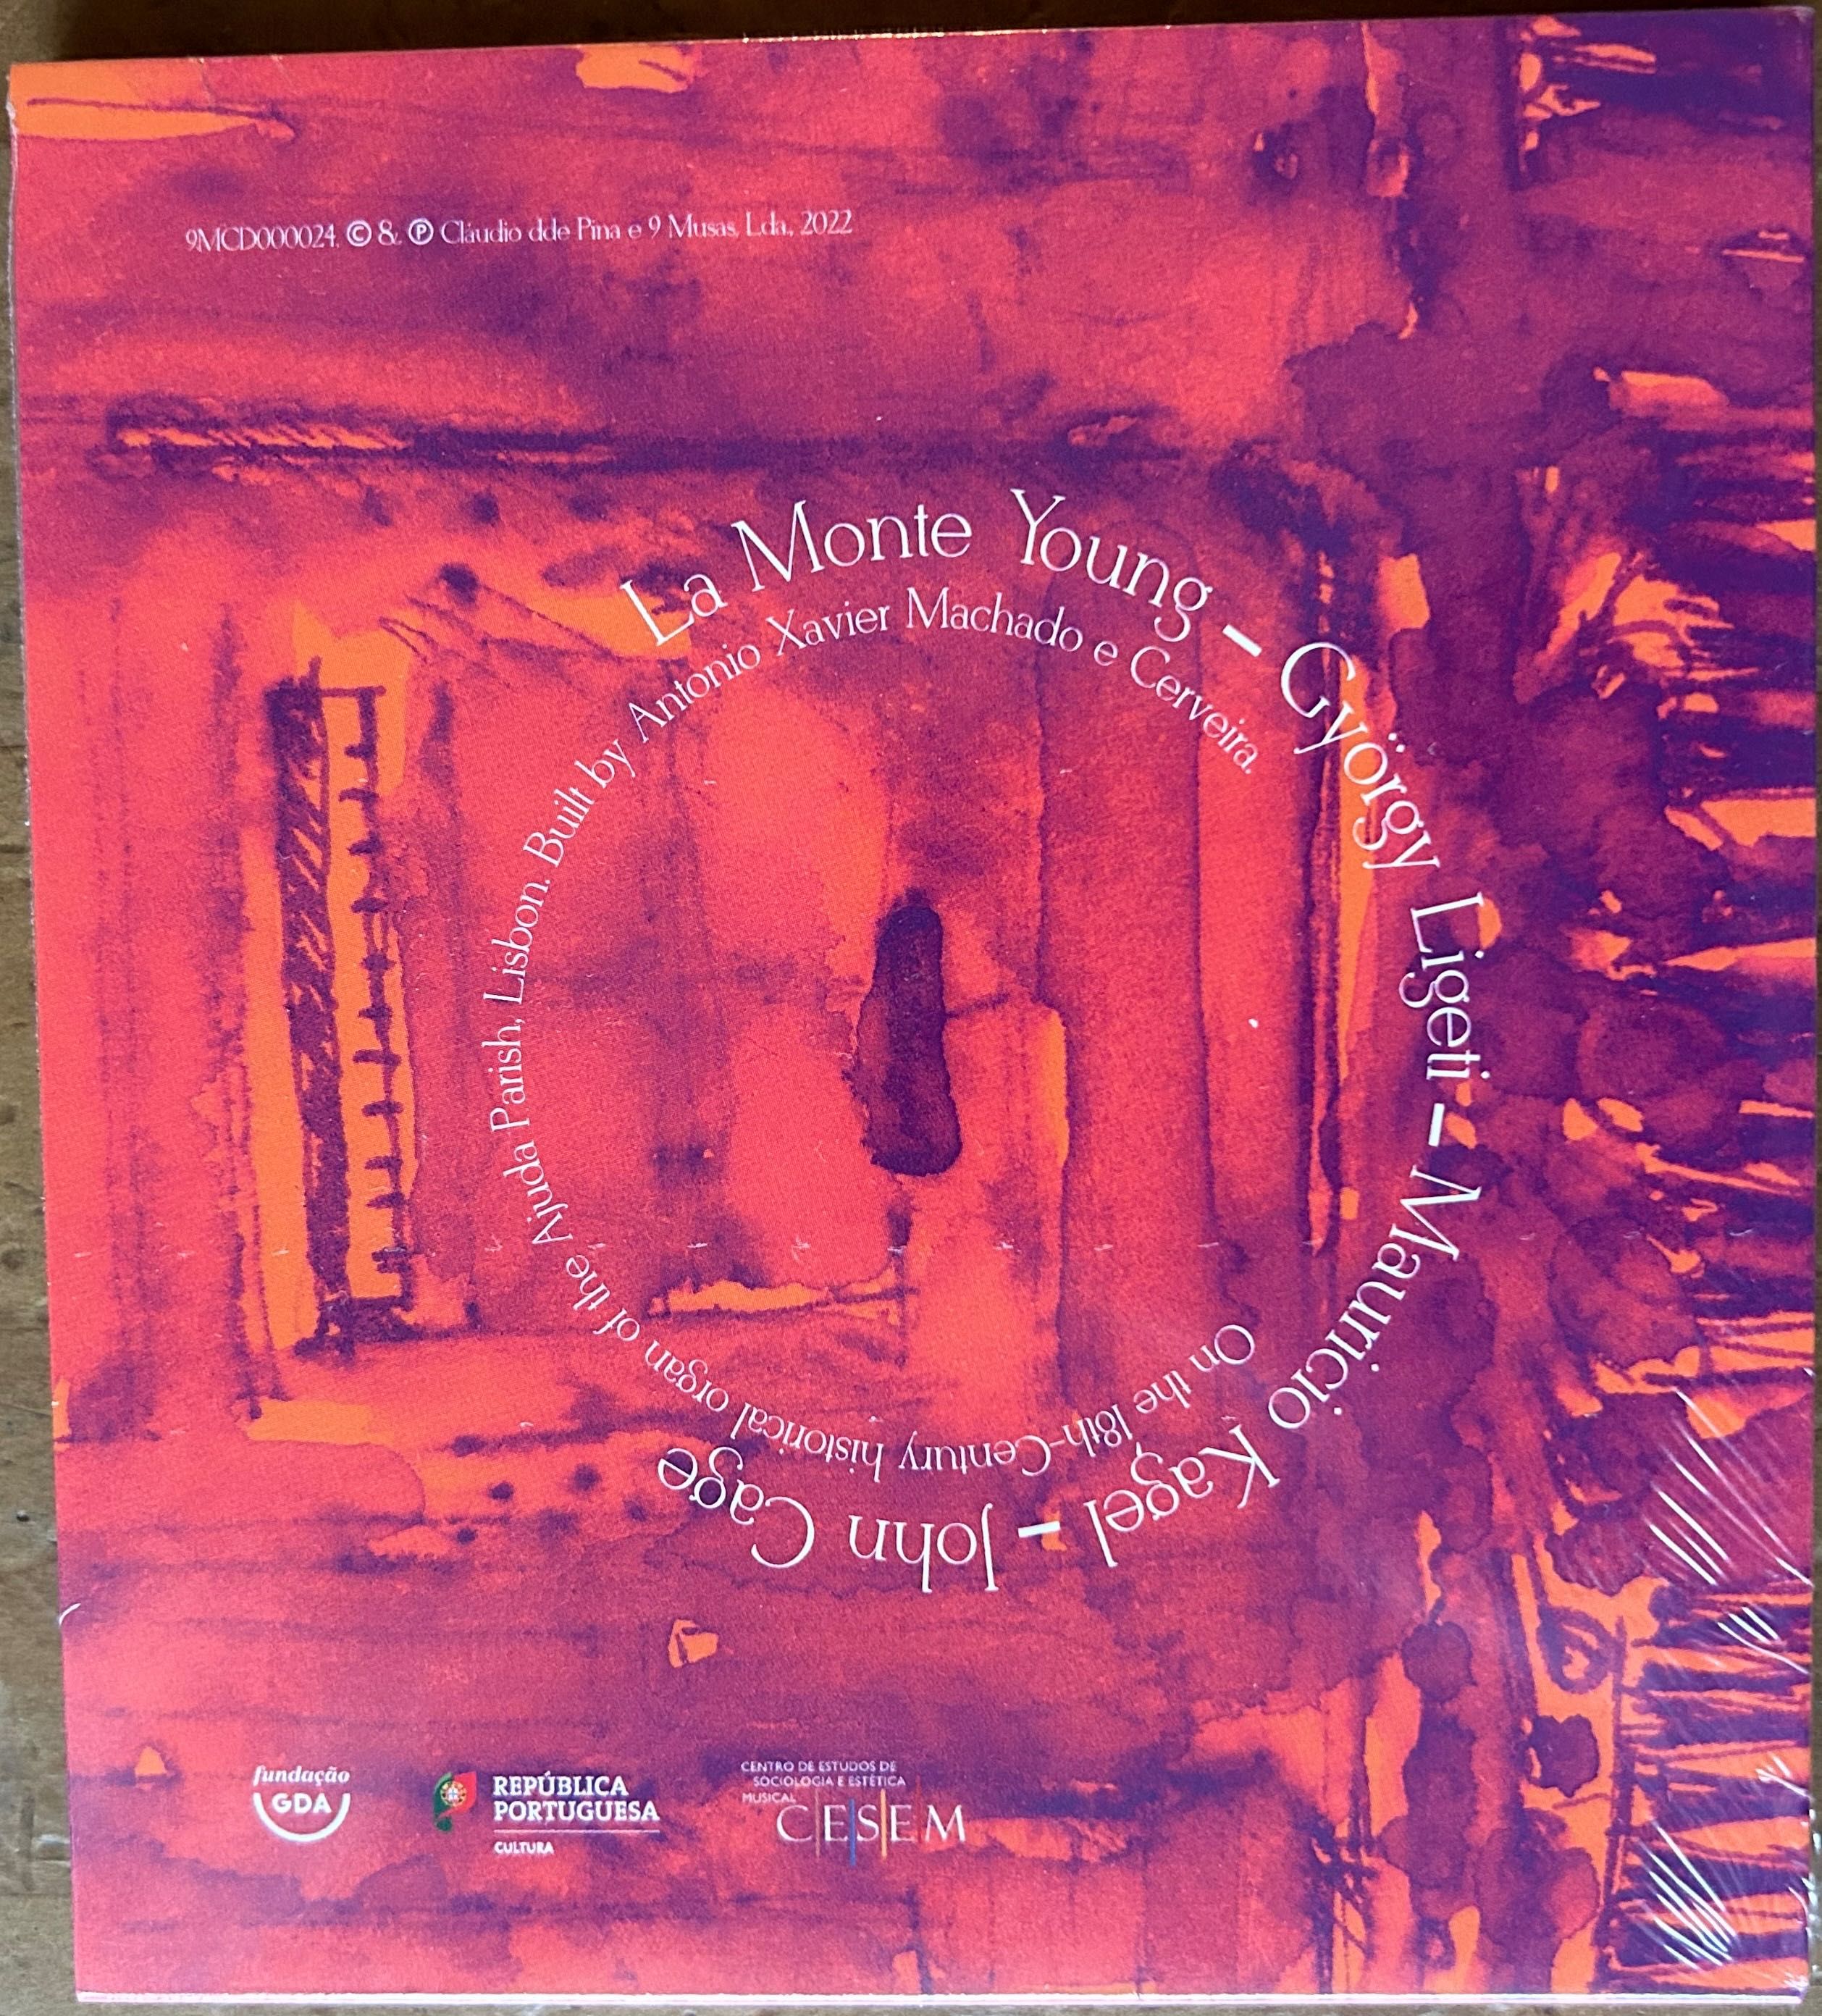 CD Cláudio Pina - Avant-Garde Organ Music